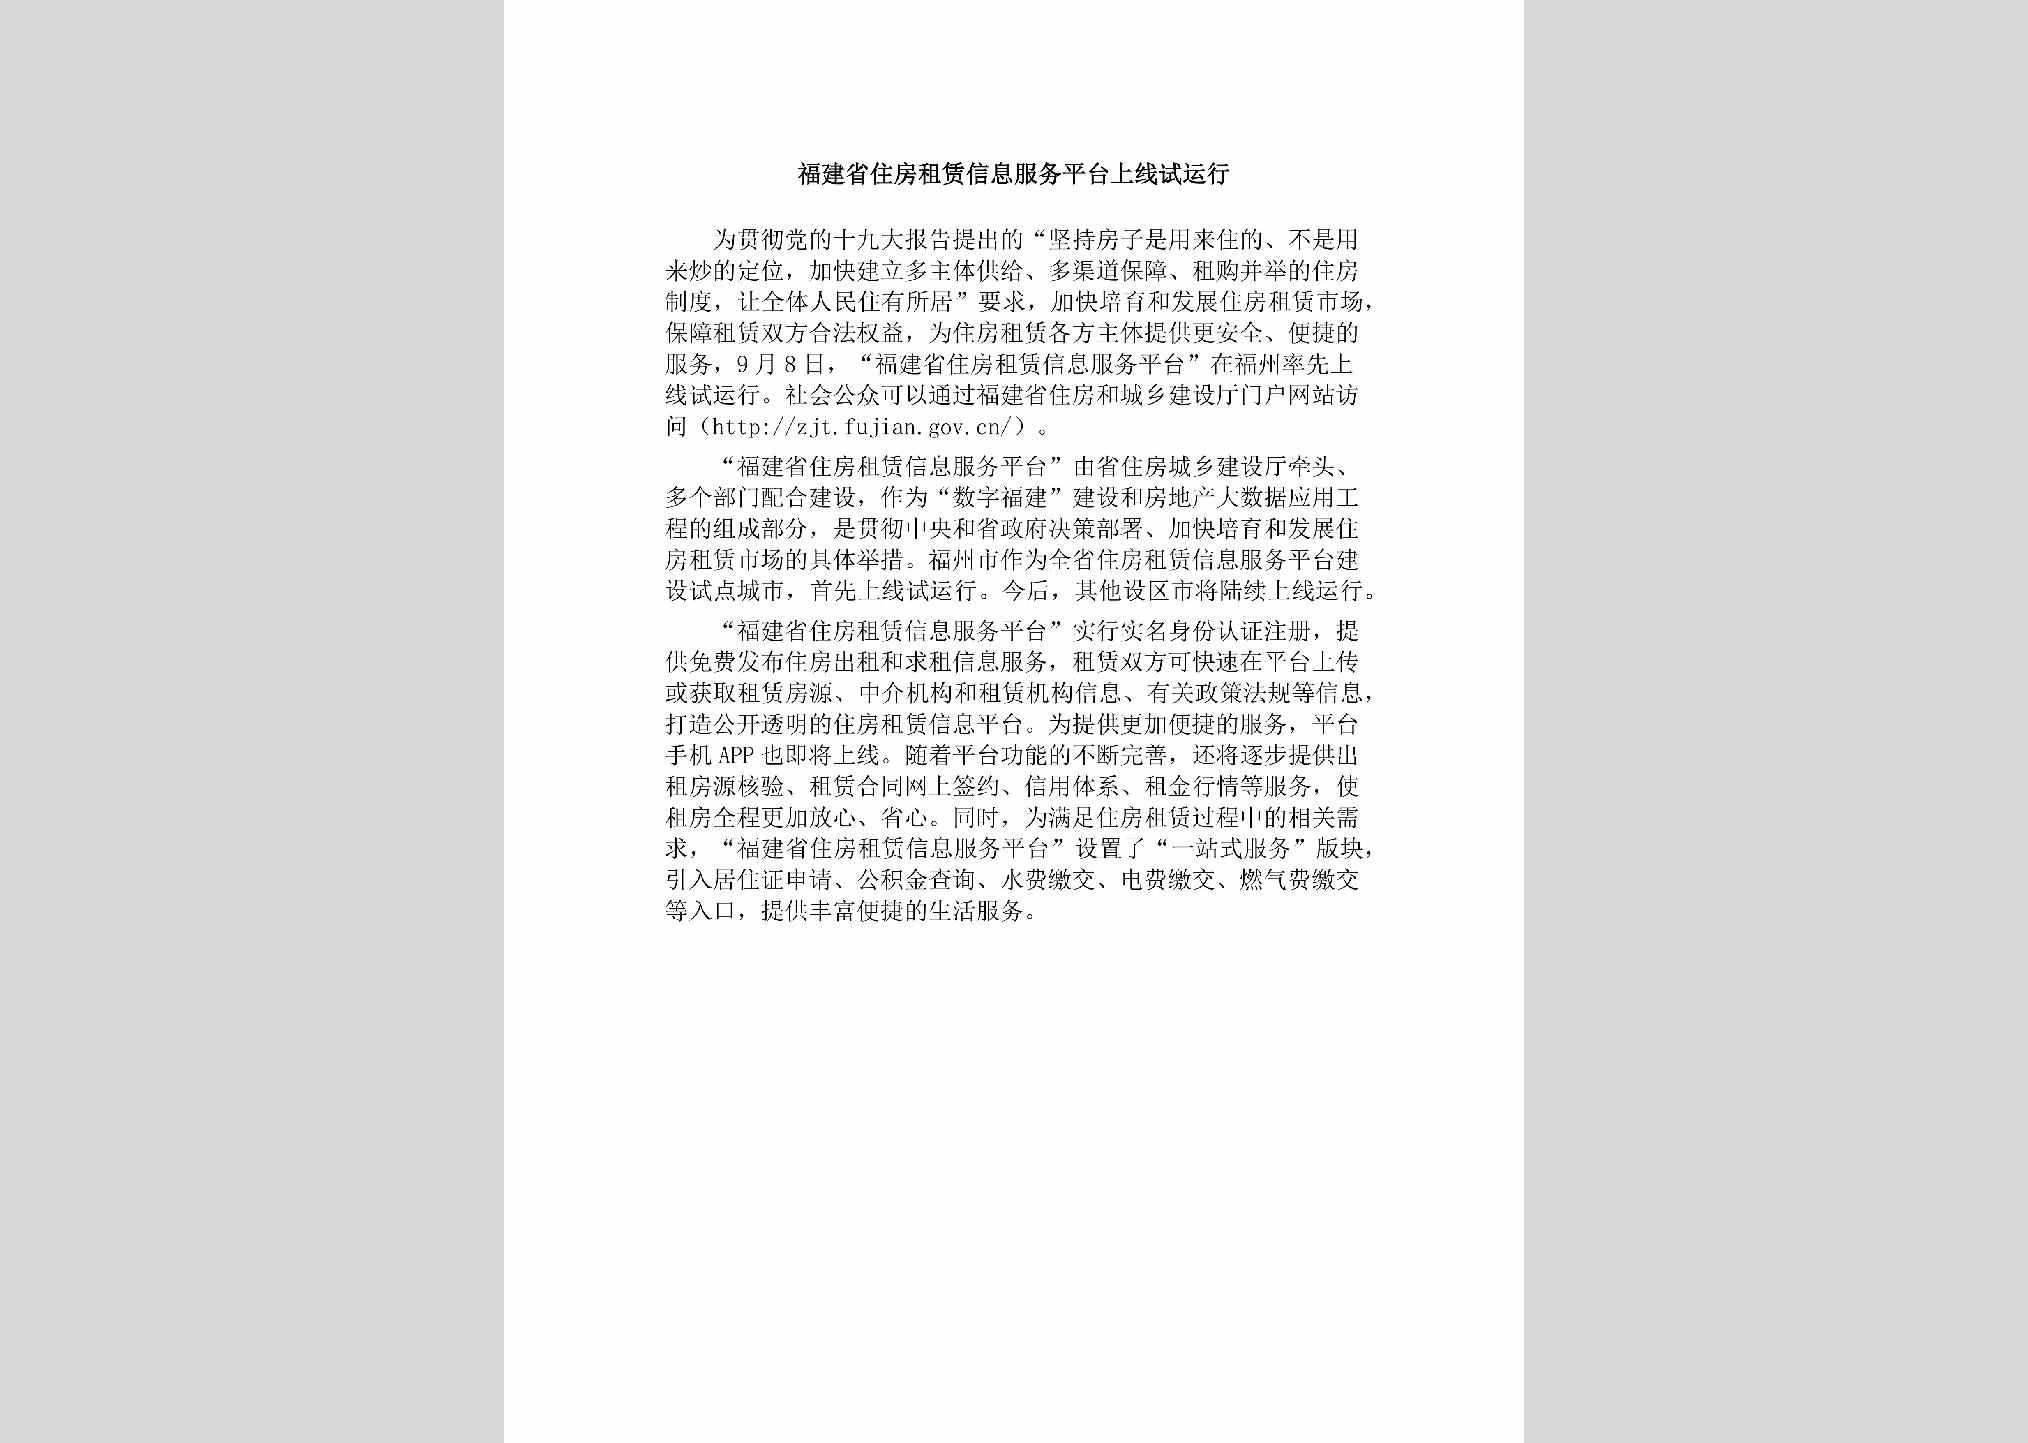 FJ-ZFZLFWPT-2018：福建省住房租赁信息服务平台上线试运行